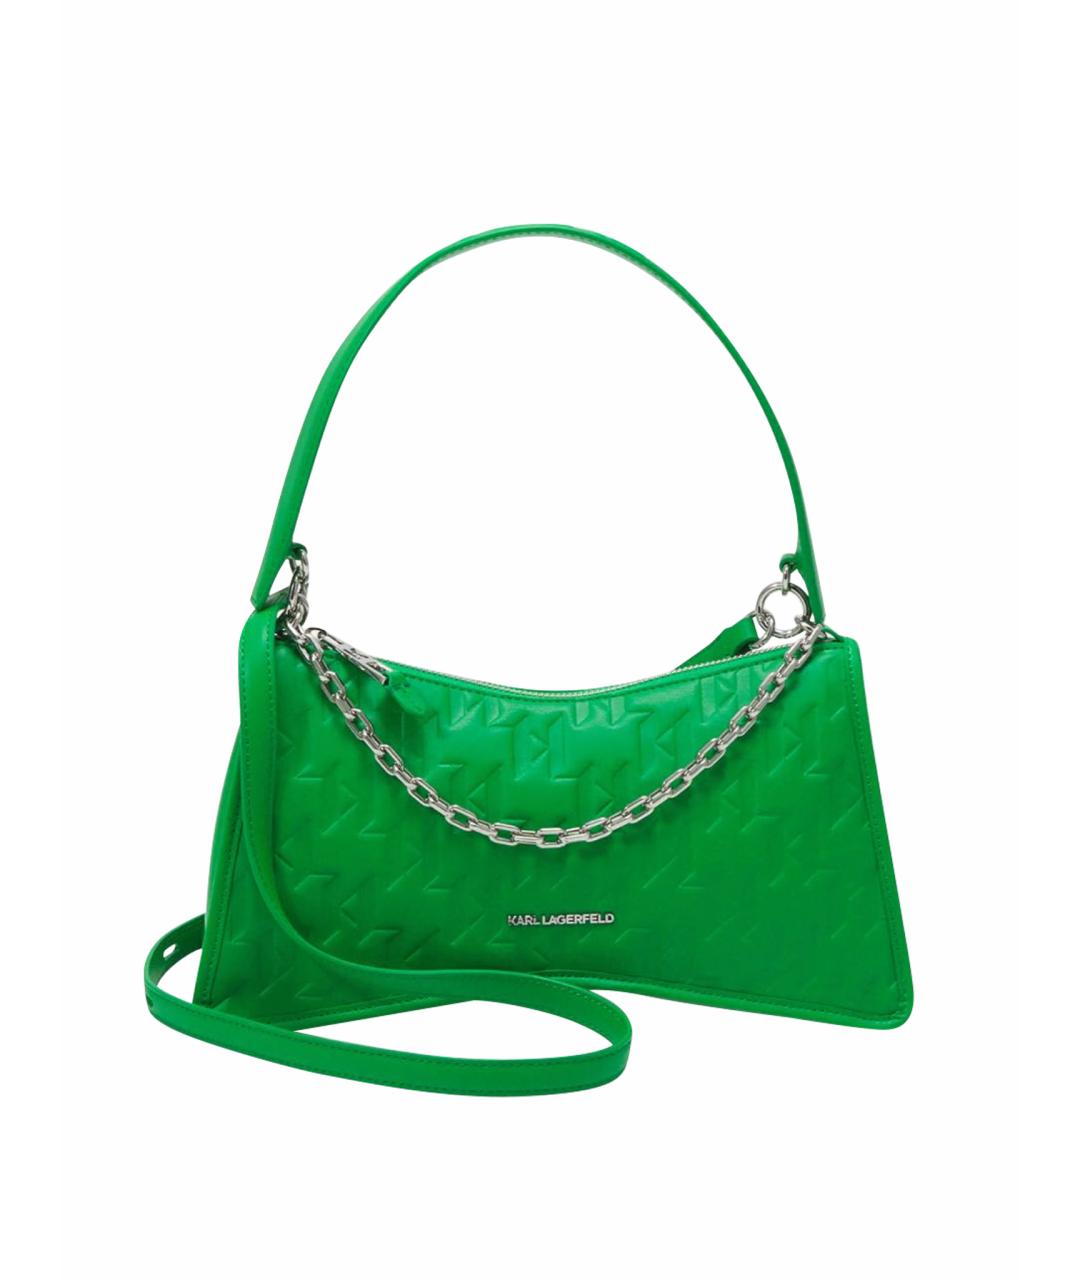 KARL LAGERFELD Зеленая кожаная сумка через плечо, фото 1